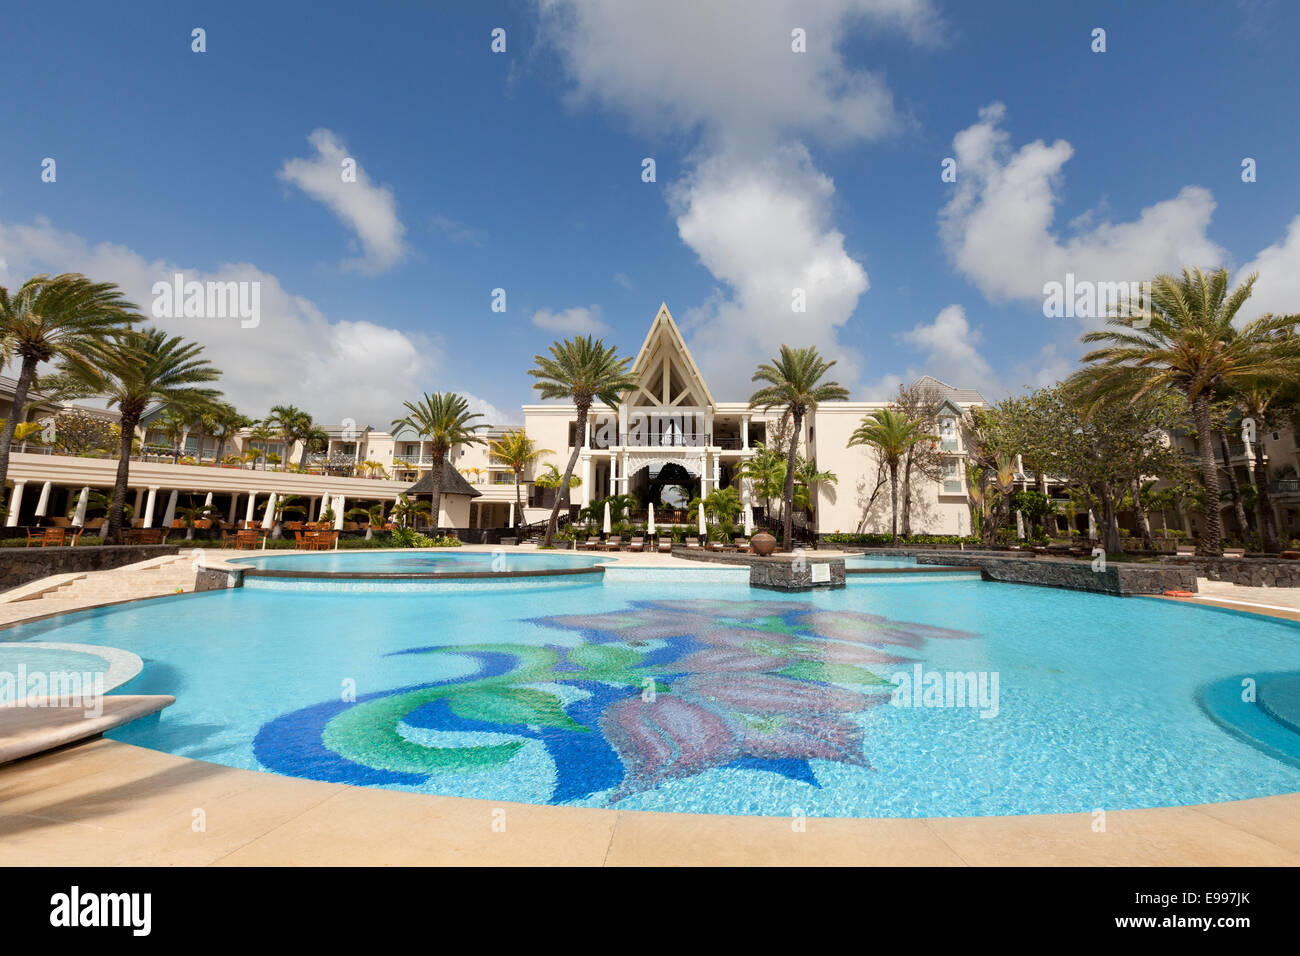 Mauritius Hotel; Das luxuriöse 5-Sterne Residence Hotel und Pool, Belle Mare, Mauritius Stockfoto